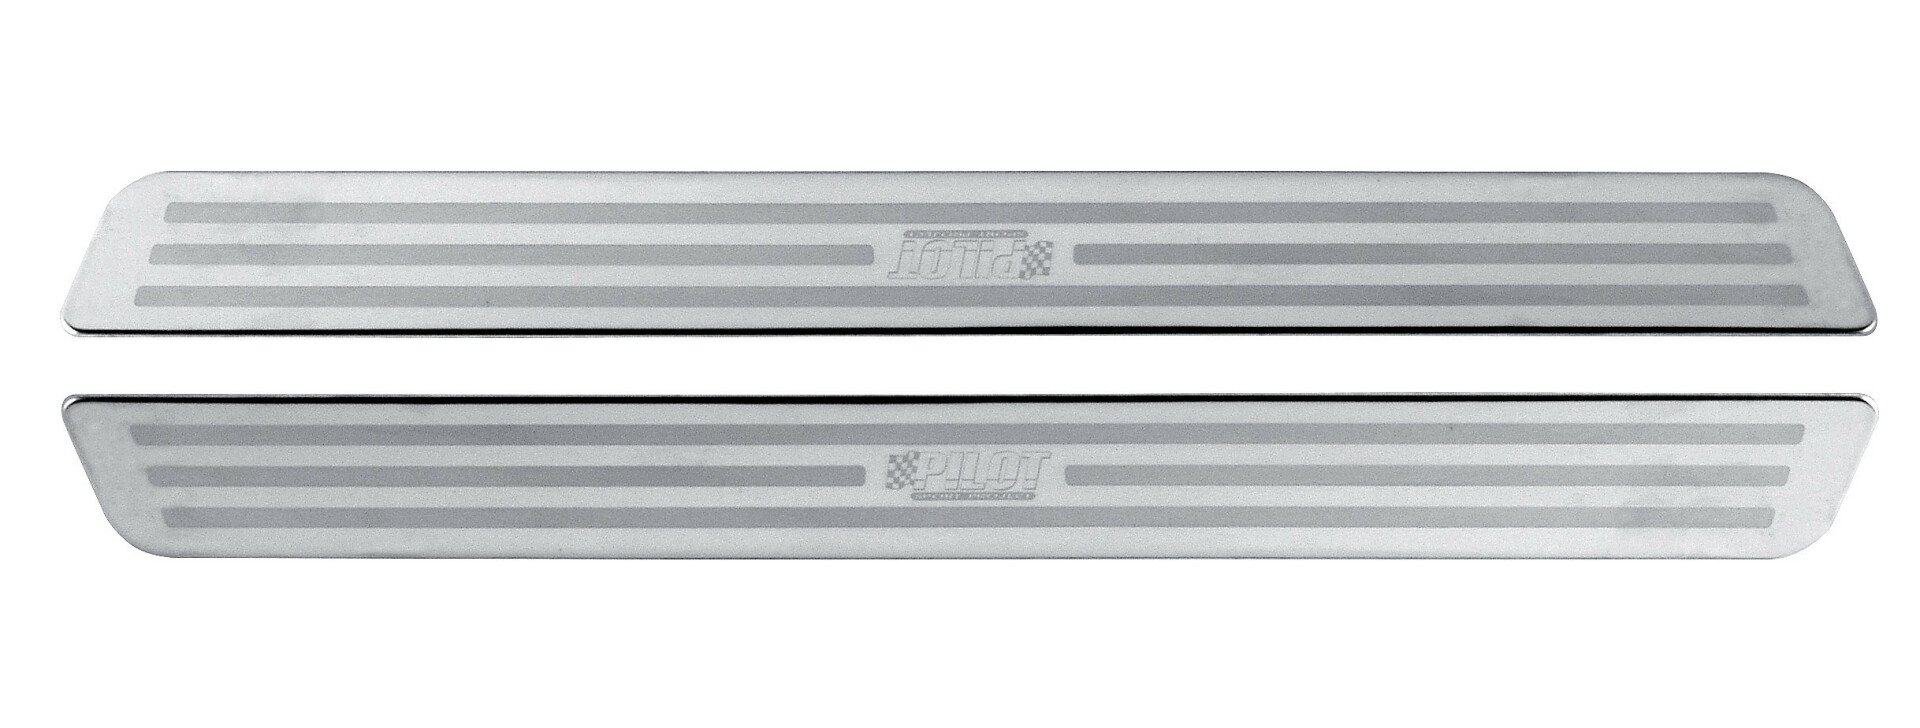 Pilot stainless steel door step lines PB-4 - 33x3,2cm thumb